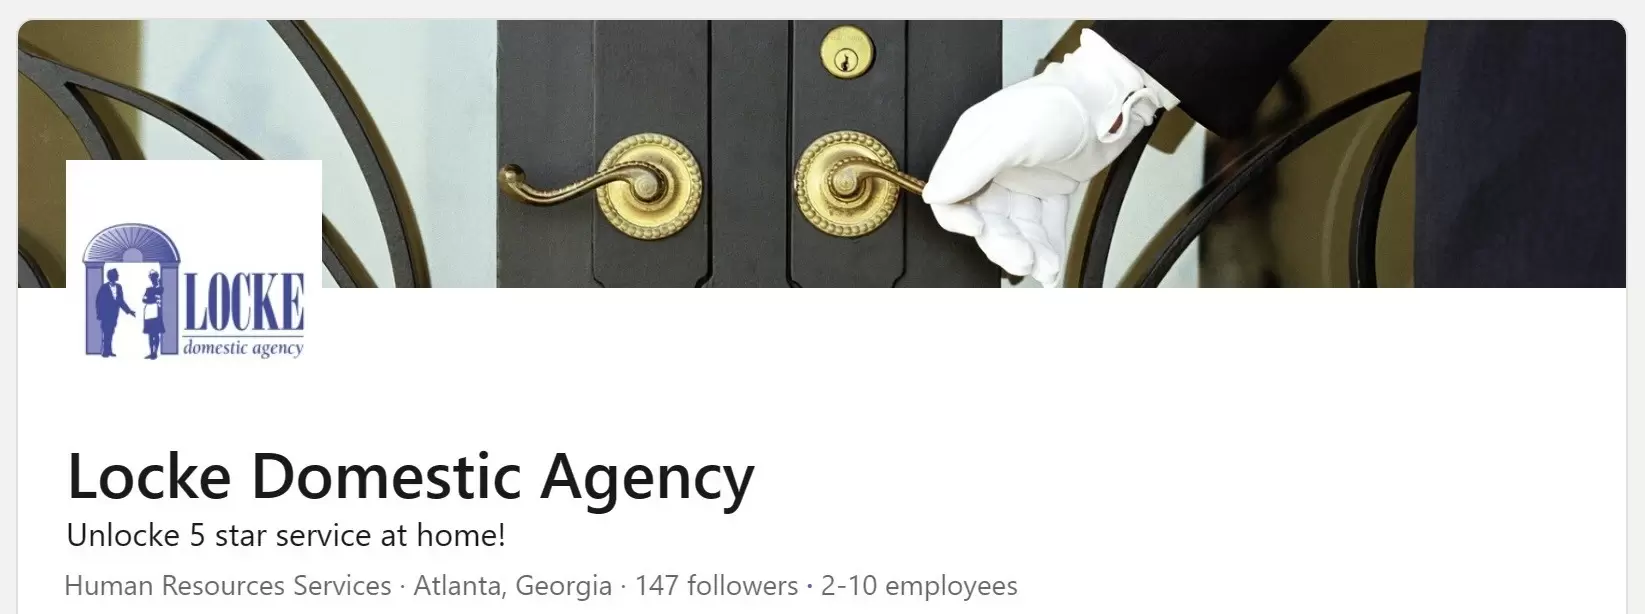 Locke Domestic Agency on LinkedIn